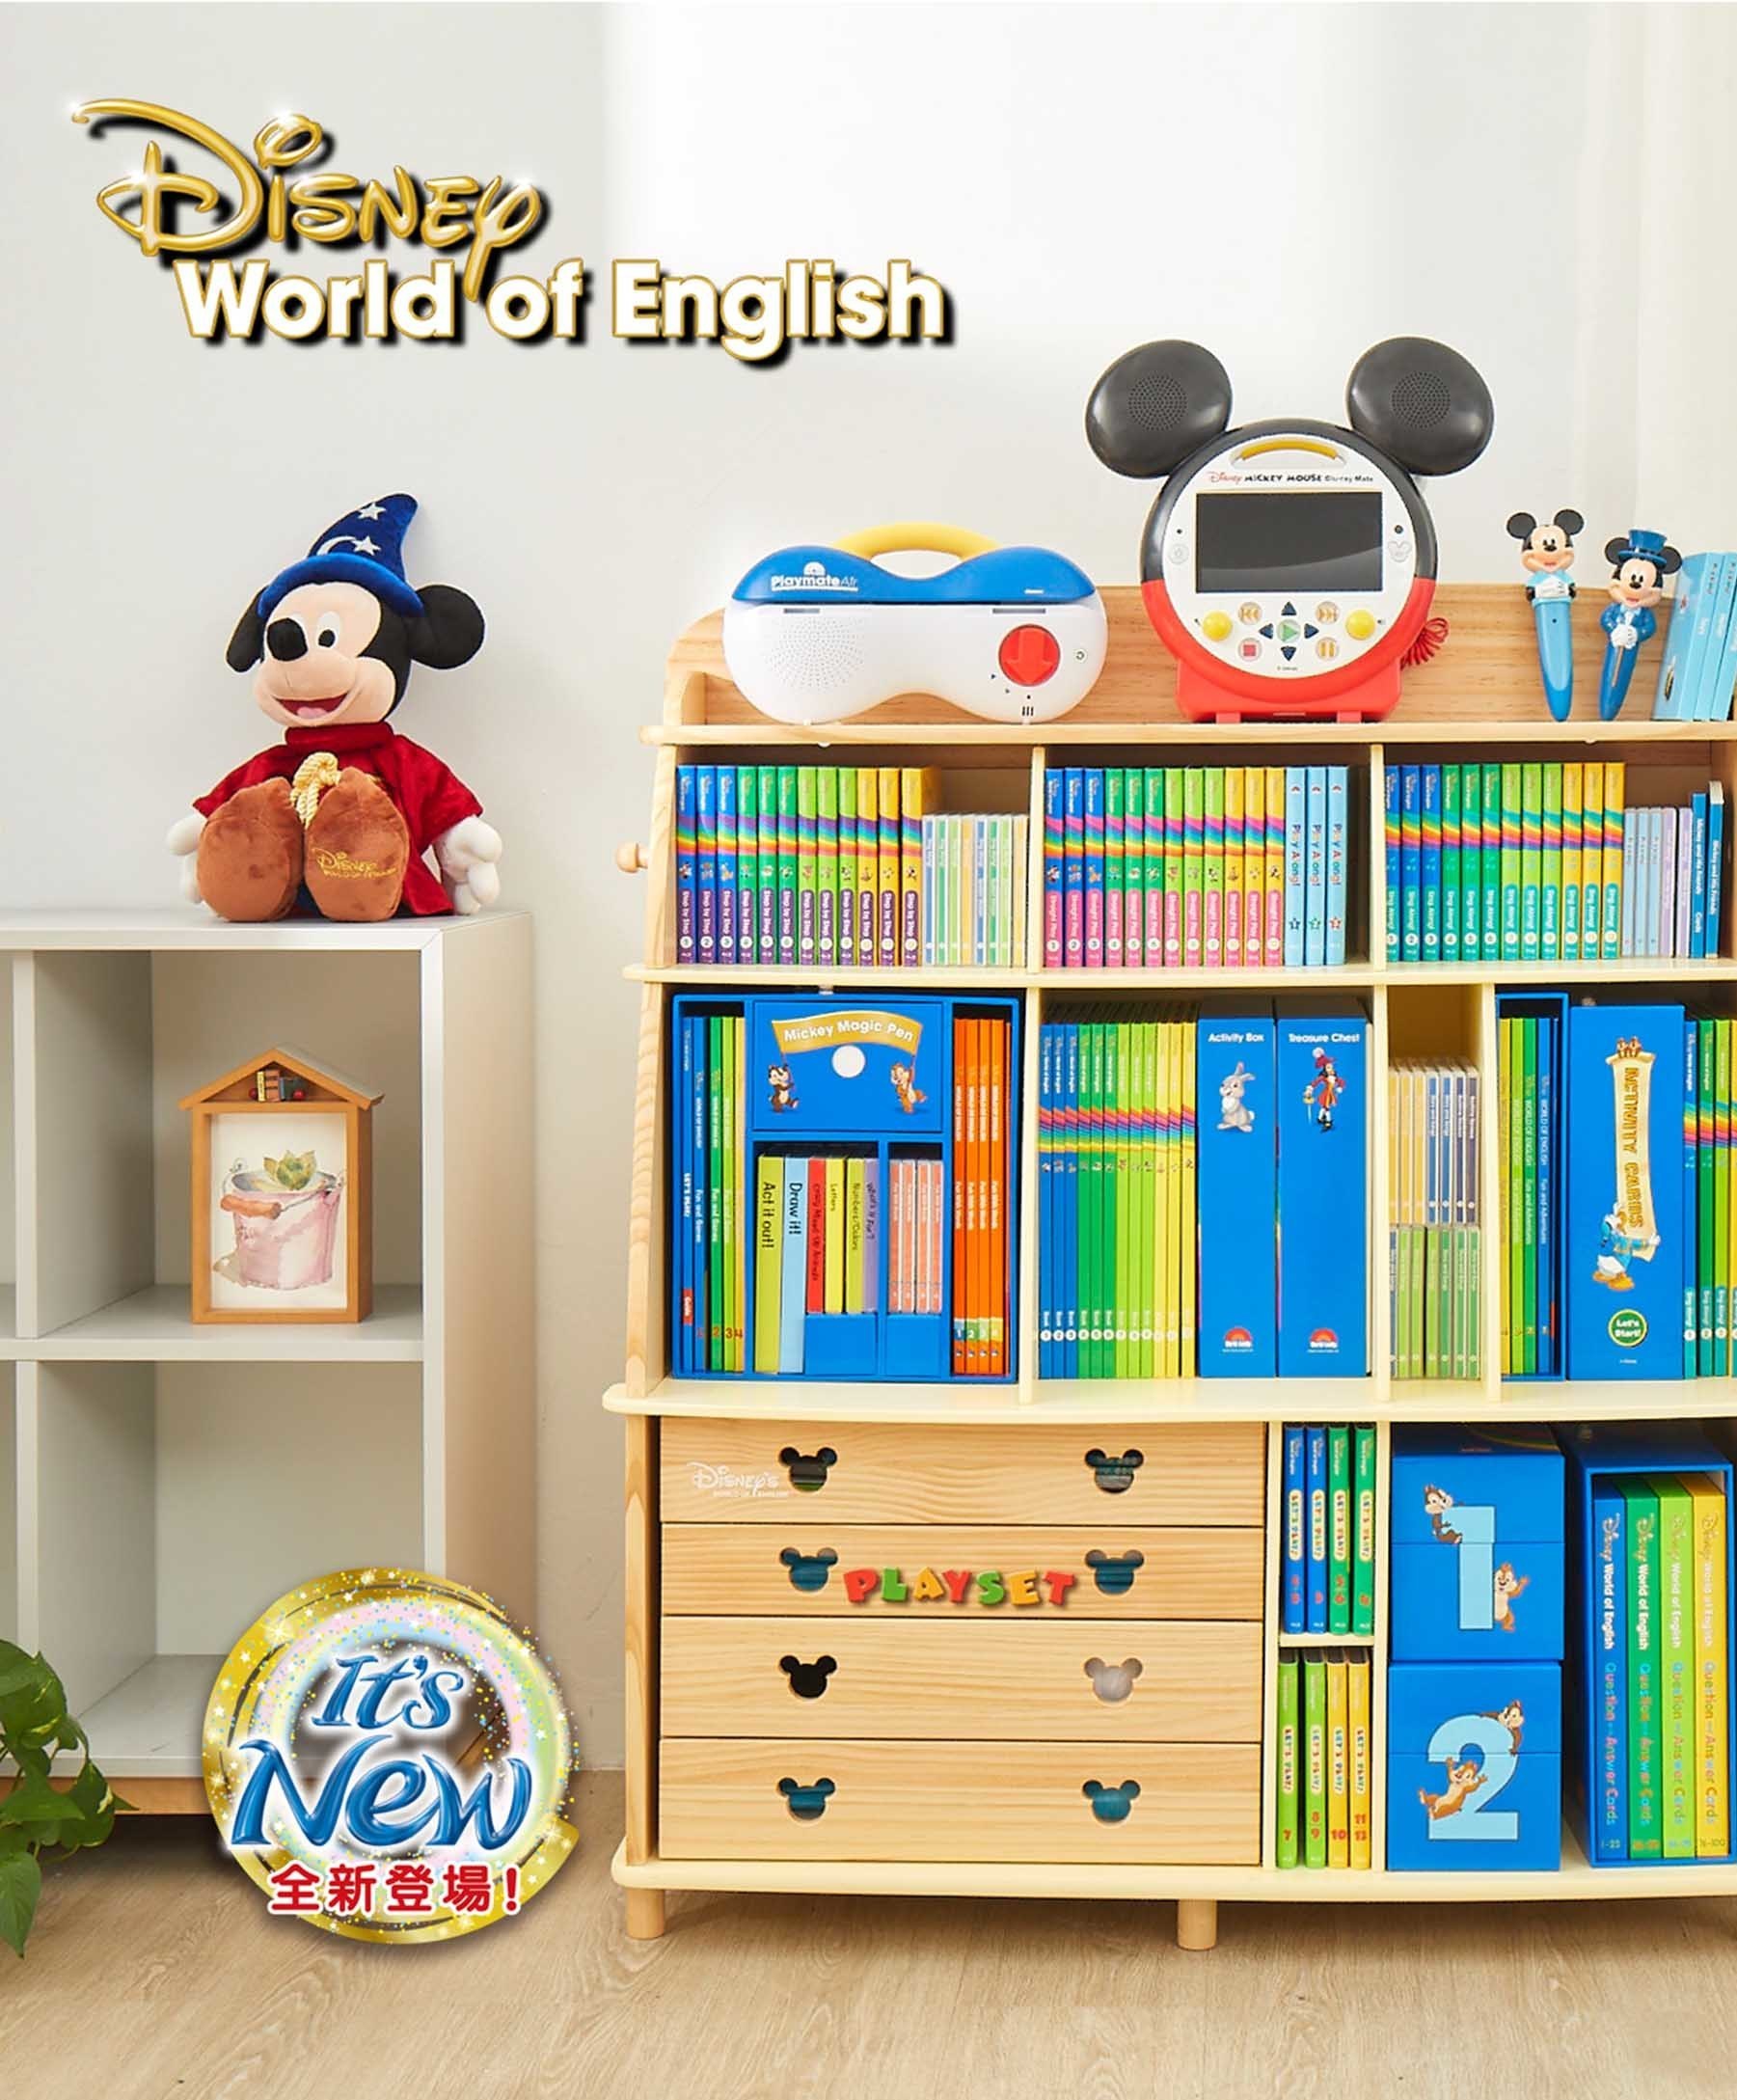 Disney World of English | DCP